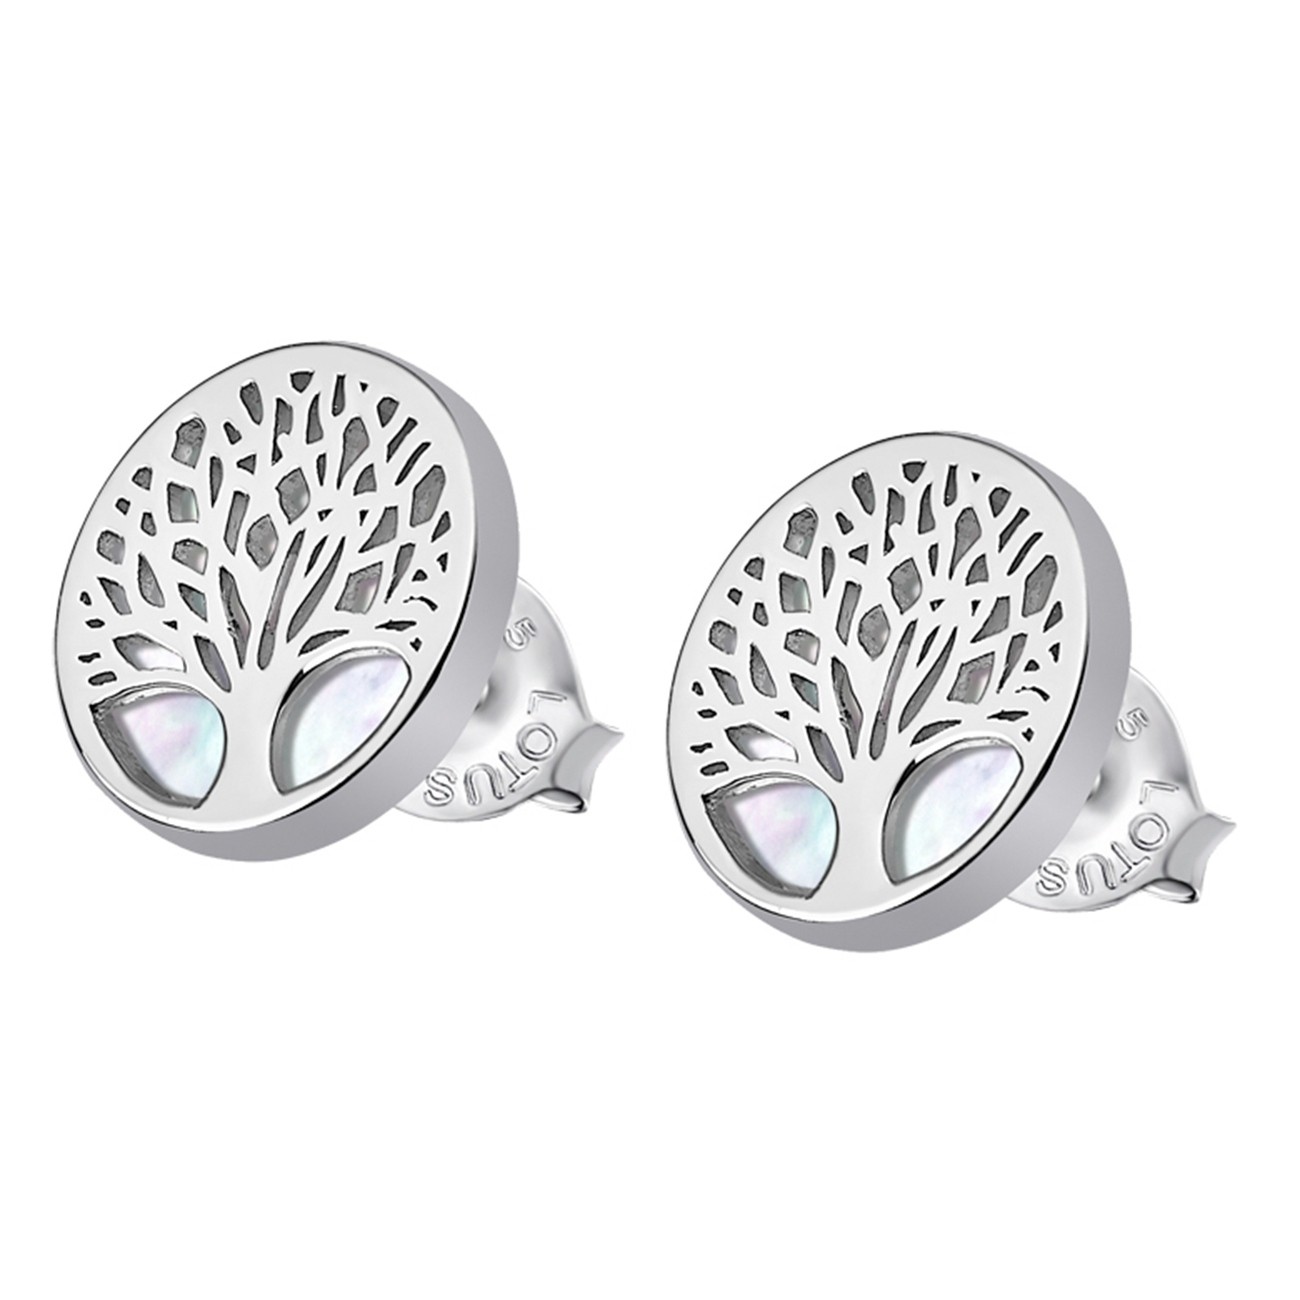 LOTUS Silver - Damen Ohrring Lebensbaum Ohrstecker aus 925 Silber JLP1678-4-1